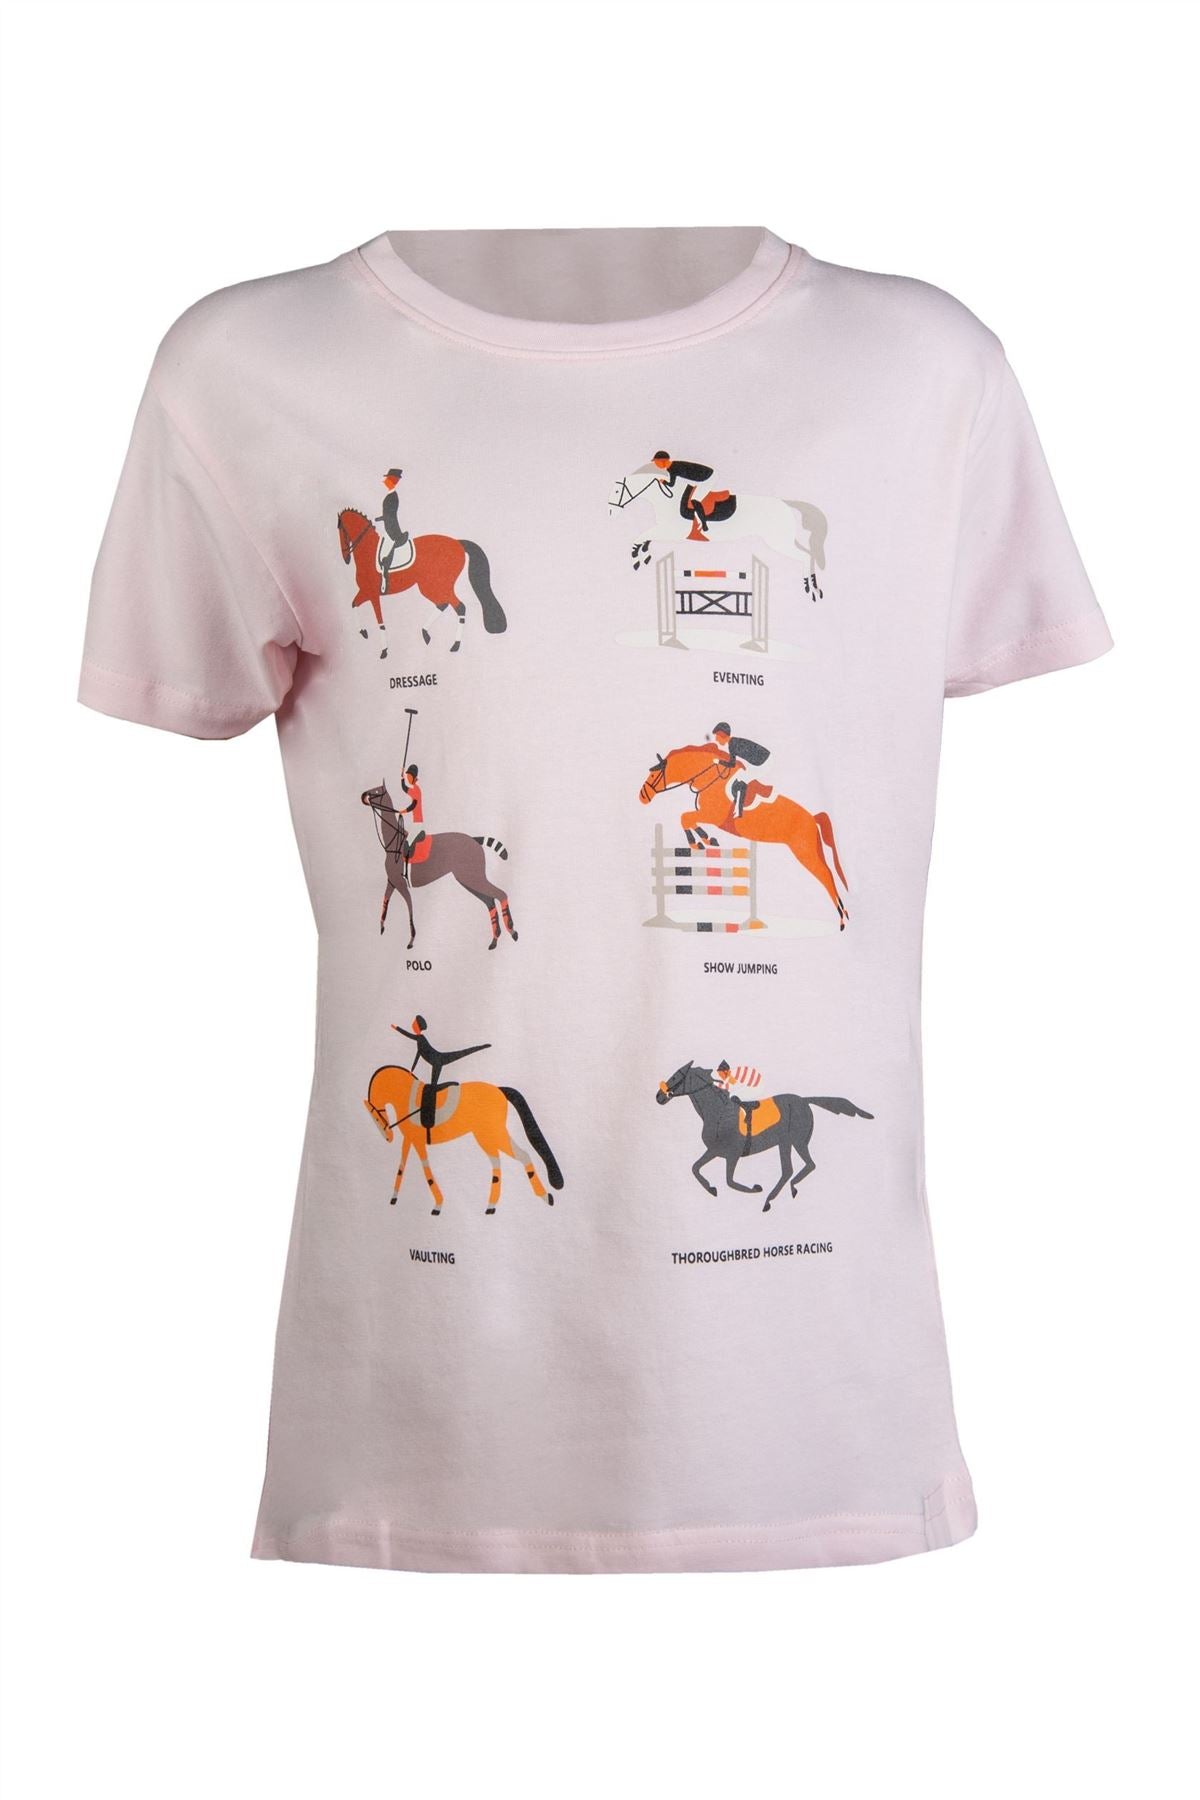 HKM Kids Tshirt Equestrian Disciplines - Just Horse Riders